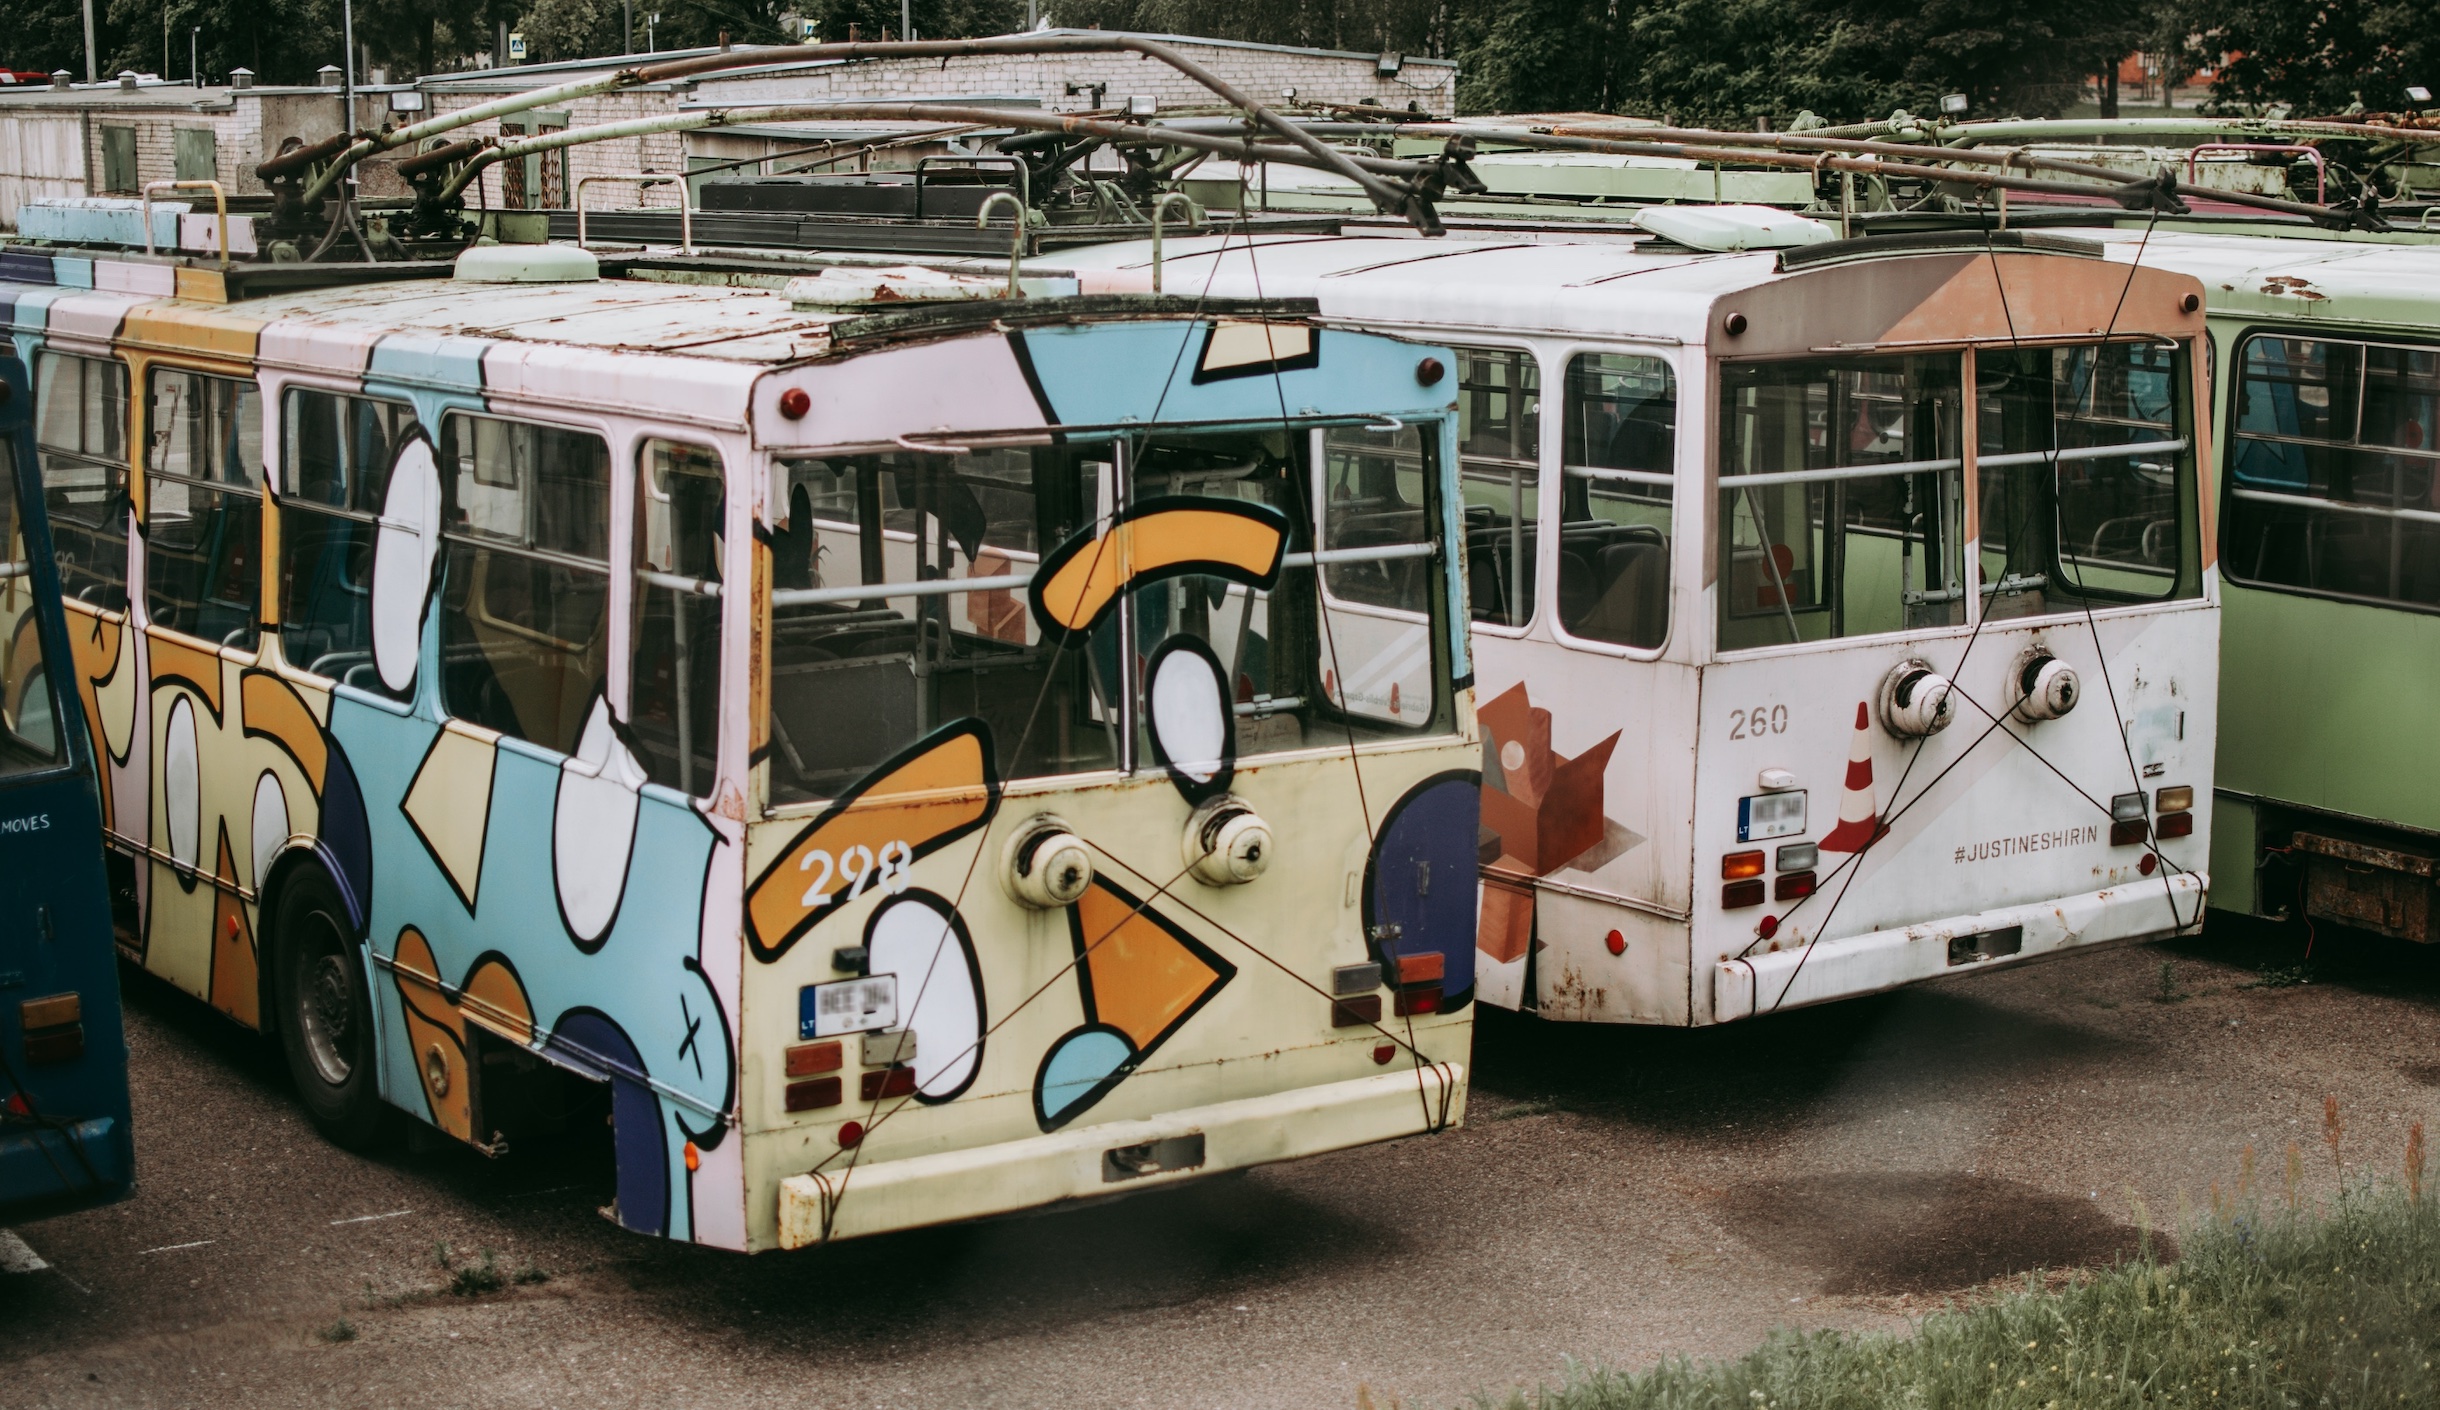 Group of old, colorfully painted busses; image by Egidijus Bielskis, via Unsplash.com.